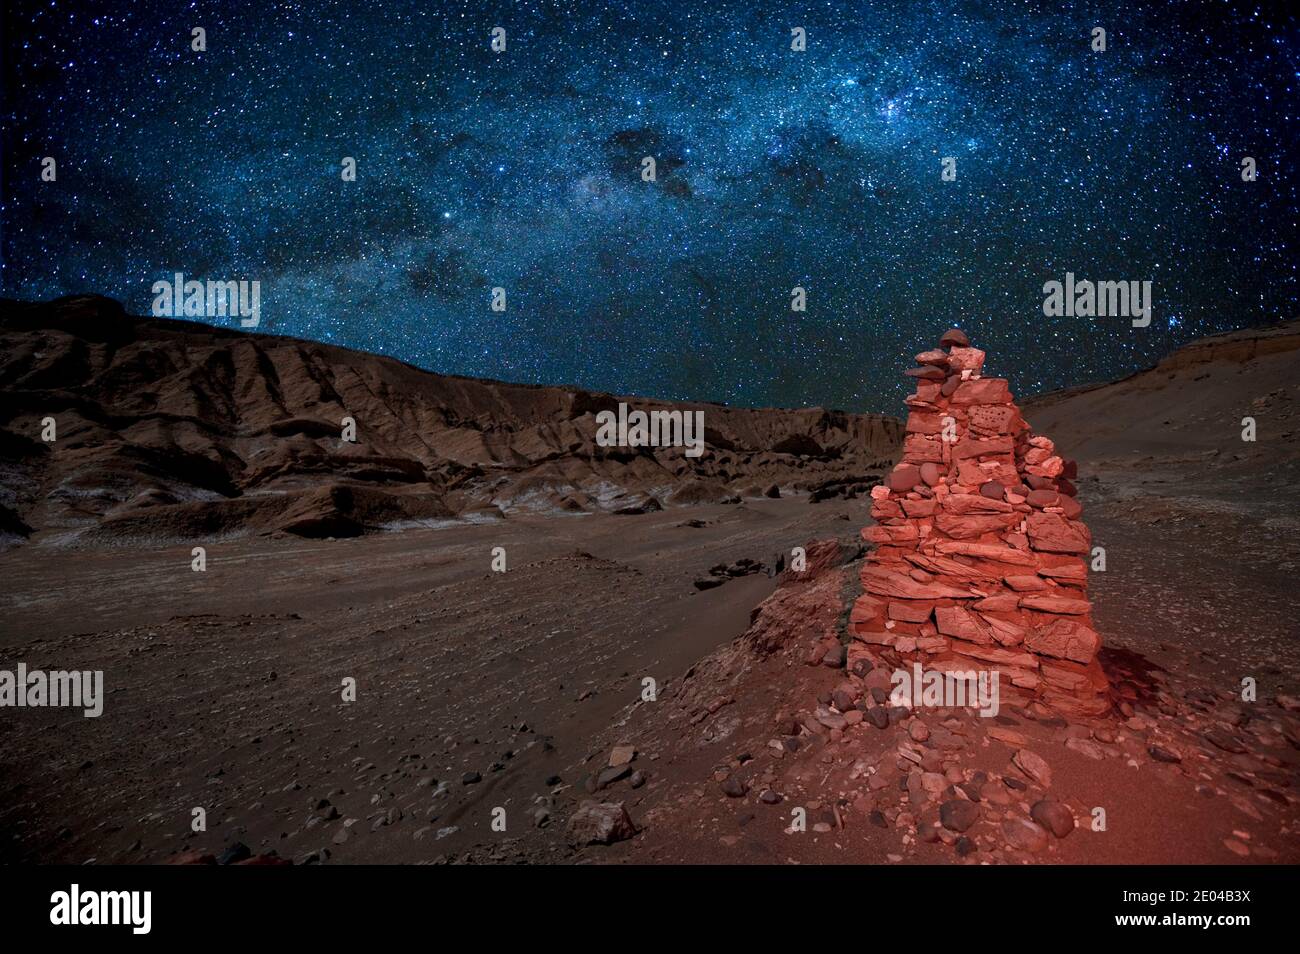 Milky Way over Moon valley at night, Atacama Desert, Chile Stock Photo